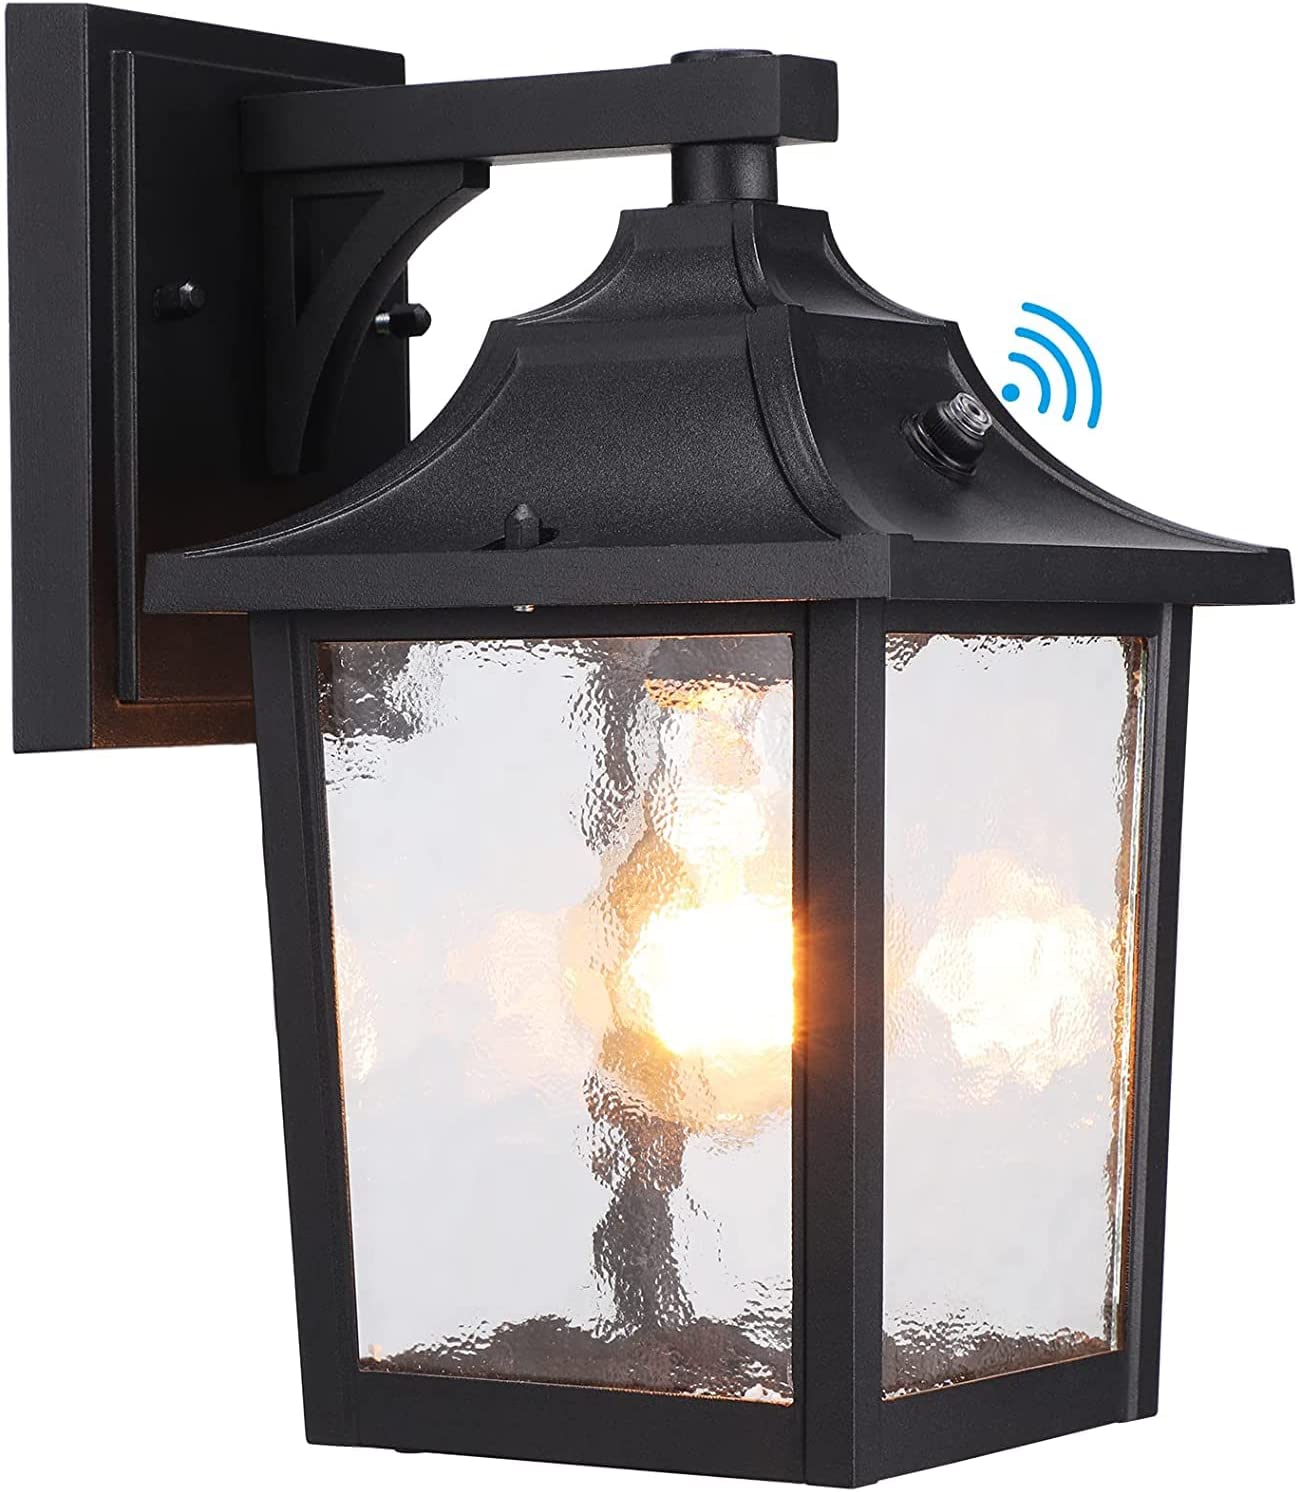 The Lantern 10" Outdoor Wall Sconce w/ E26 Socket